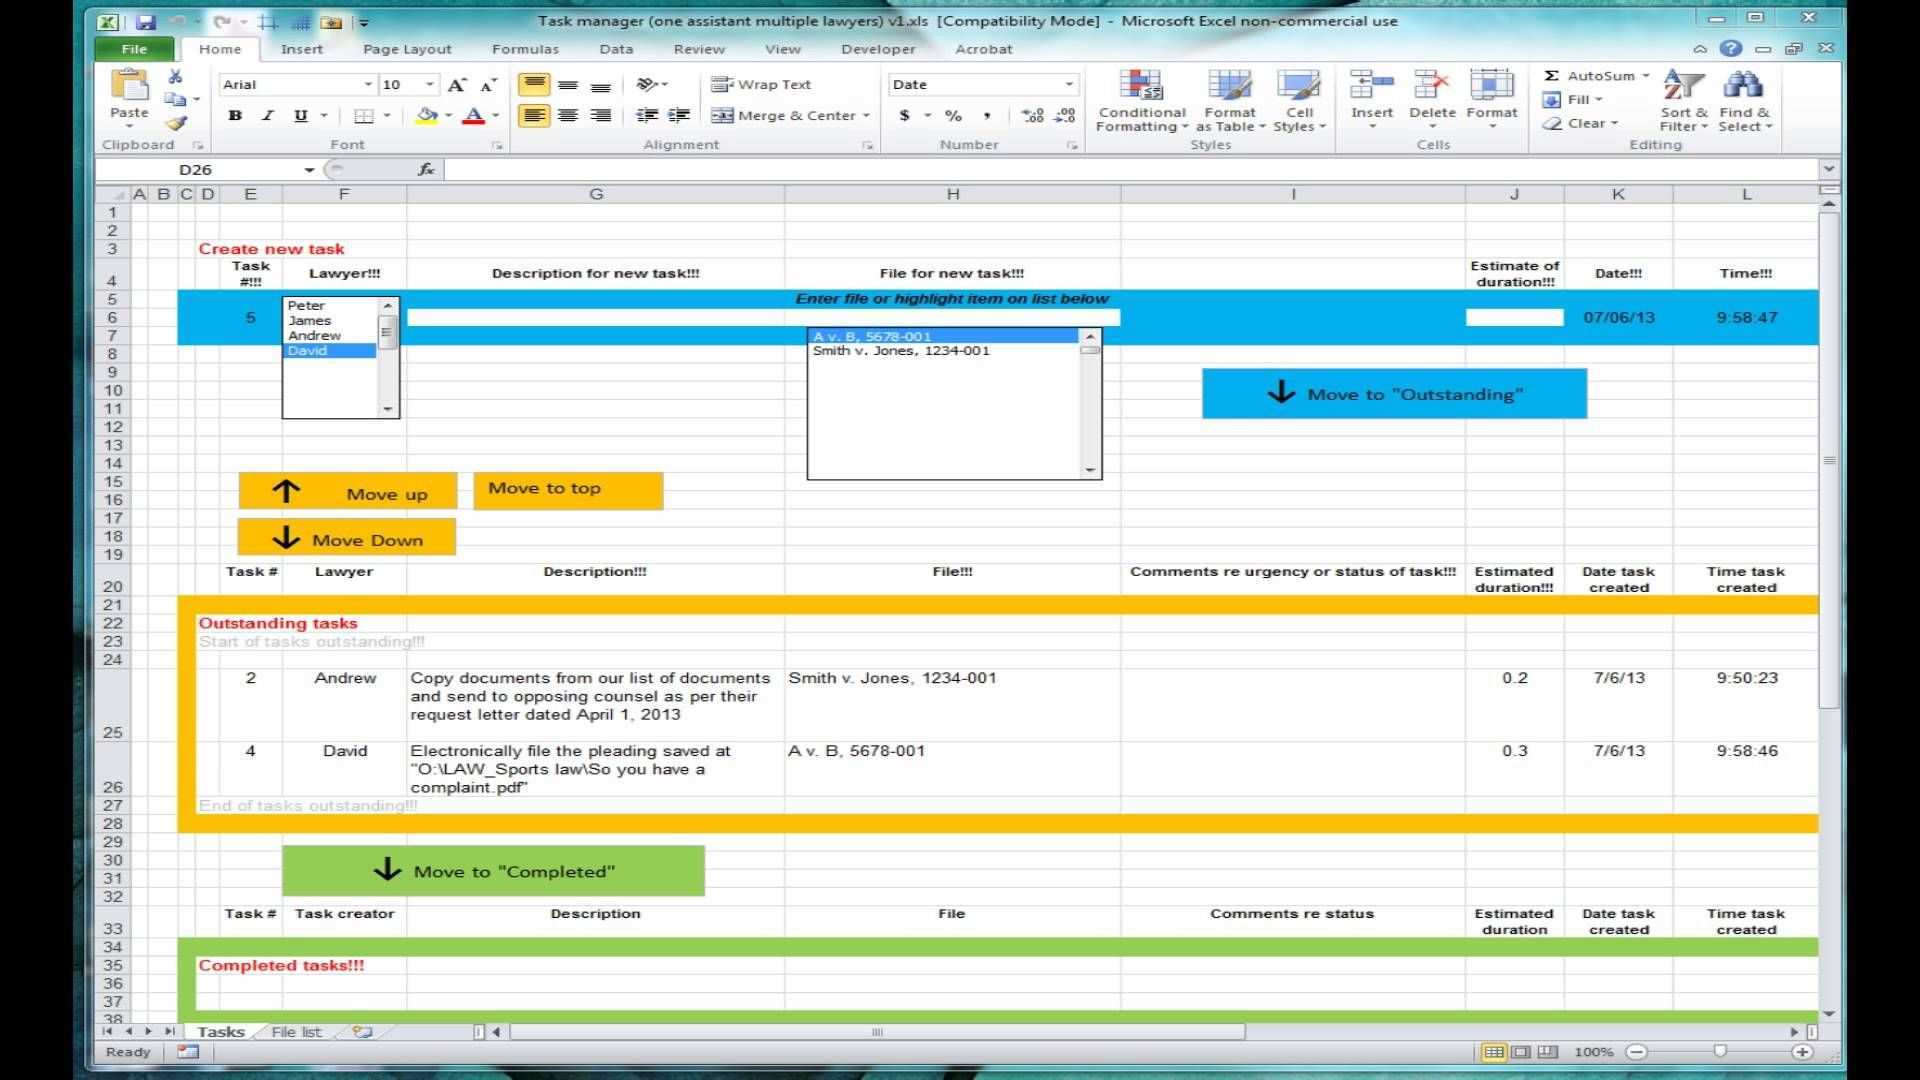 Excel Spreadsheet For Tracking Tasks Shared Workbook Youtube Document Tracking Workbook Design Excel Spreadsheets